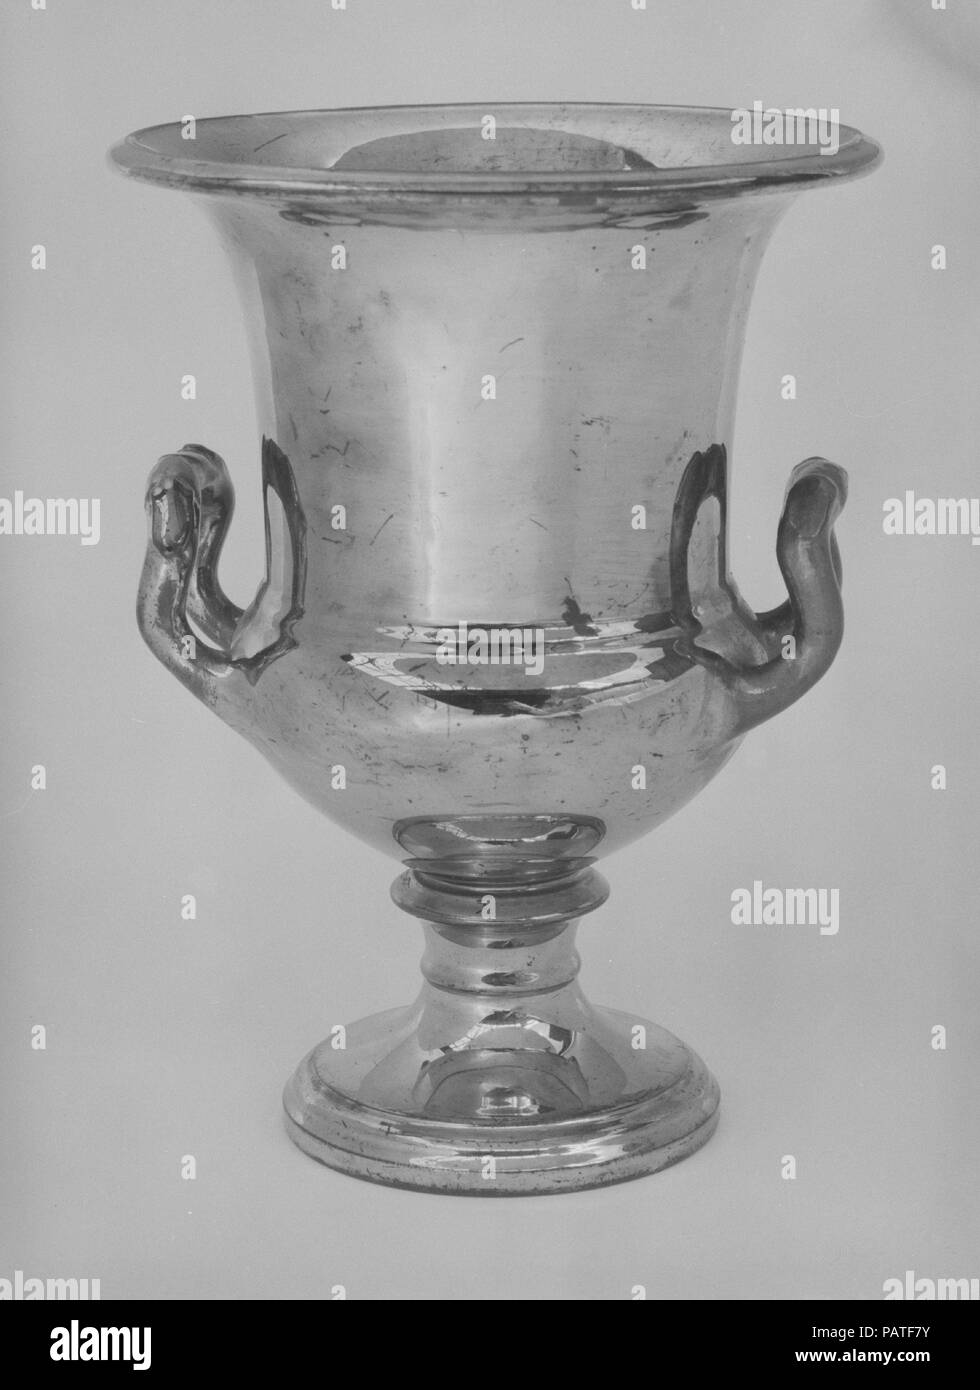 Vase. Culture: British. Dimensions: H. 9 1/2 in. (24.1 cm). Date: 1800-1830. Museum: Metropolitan Museum of Art, New York, USA. Stock Photo